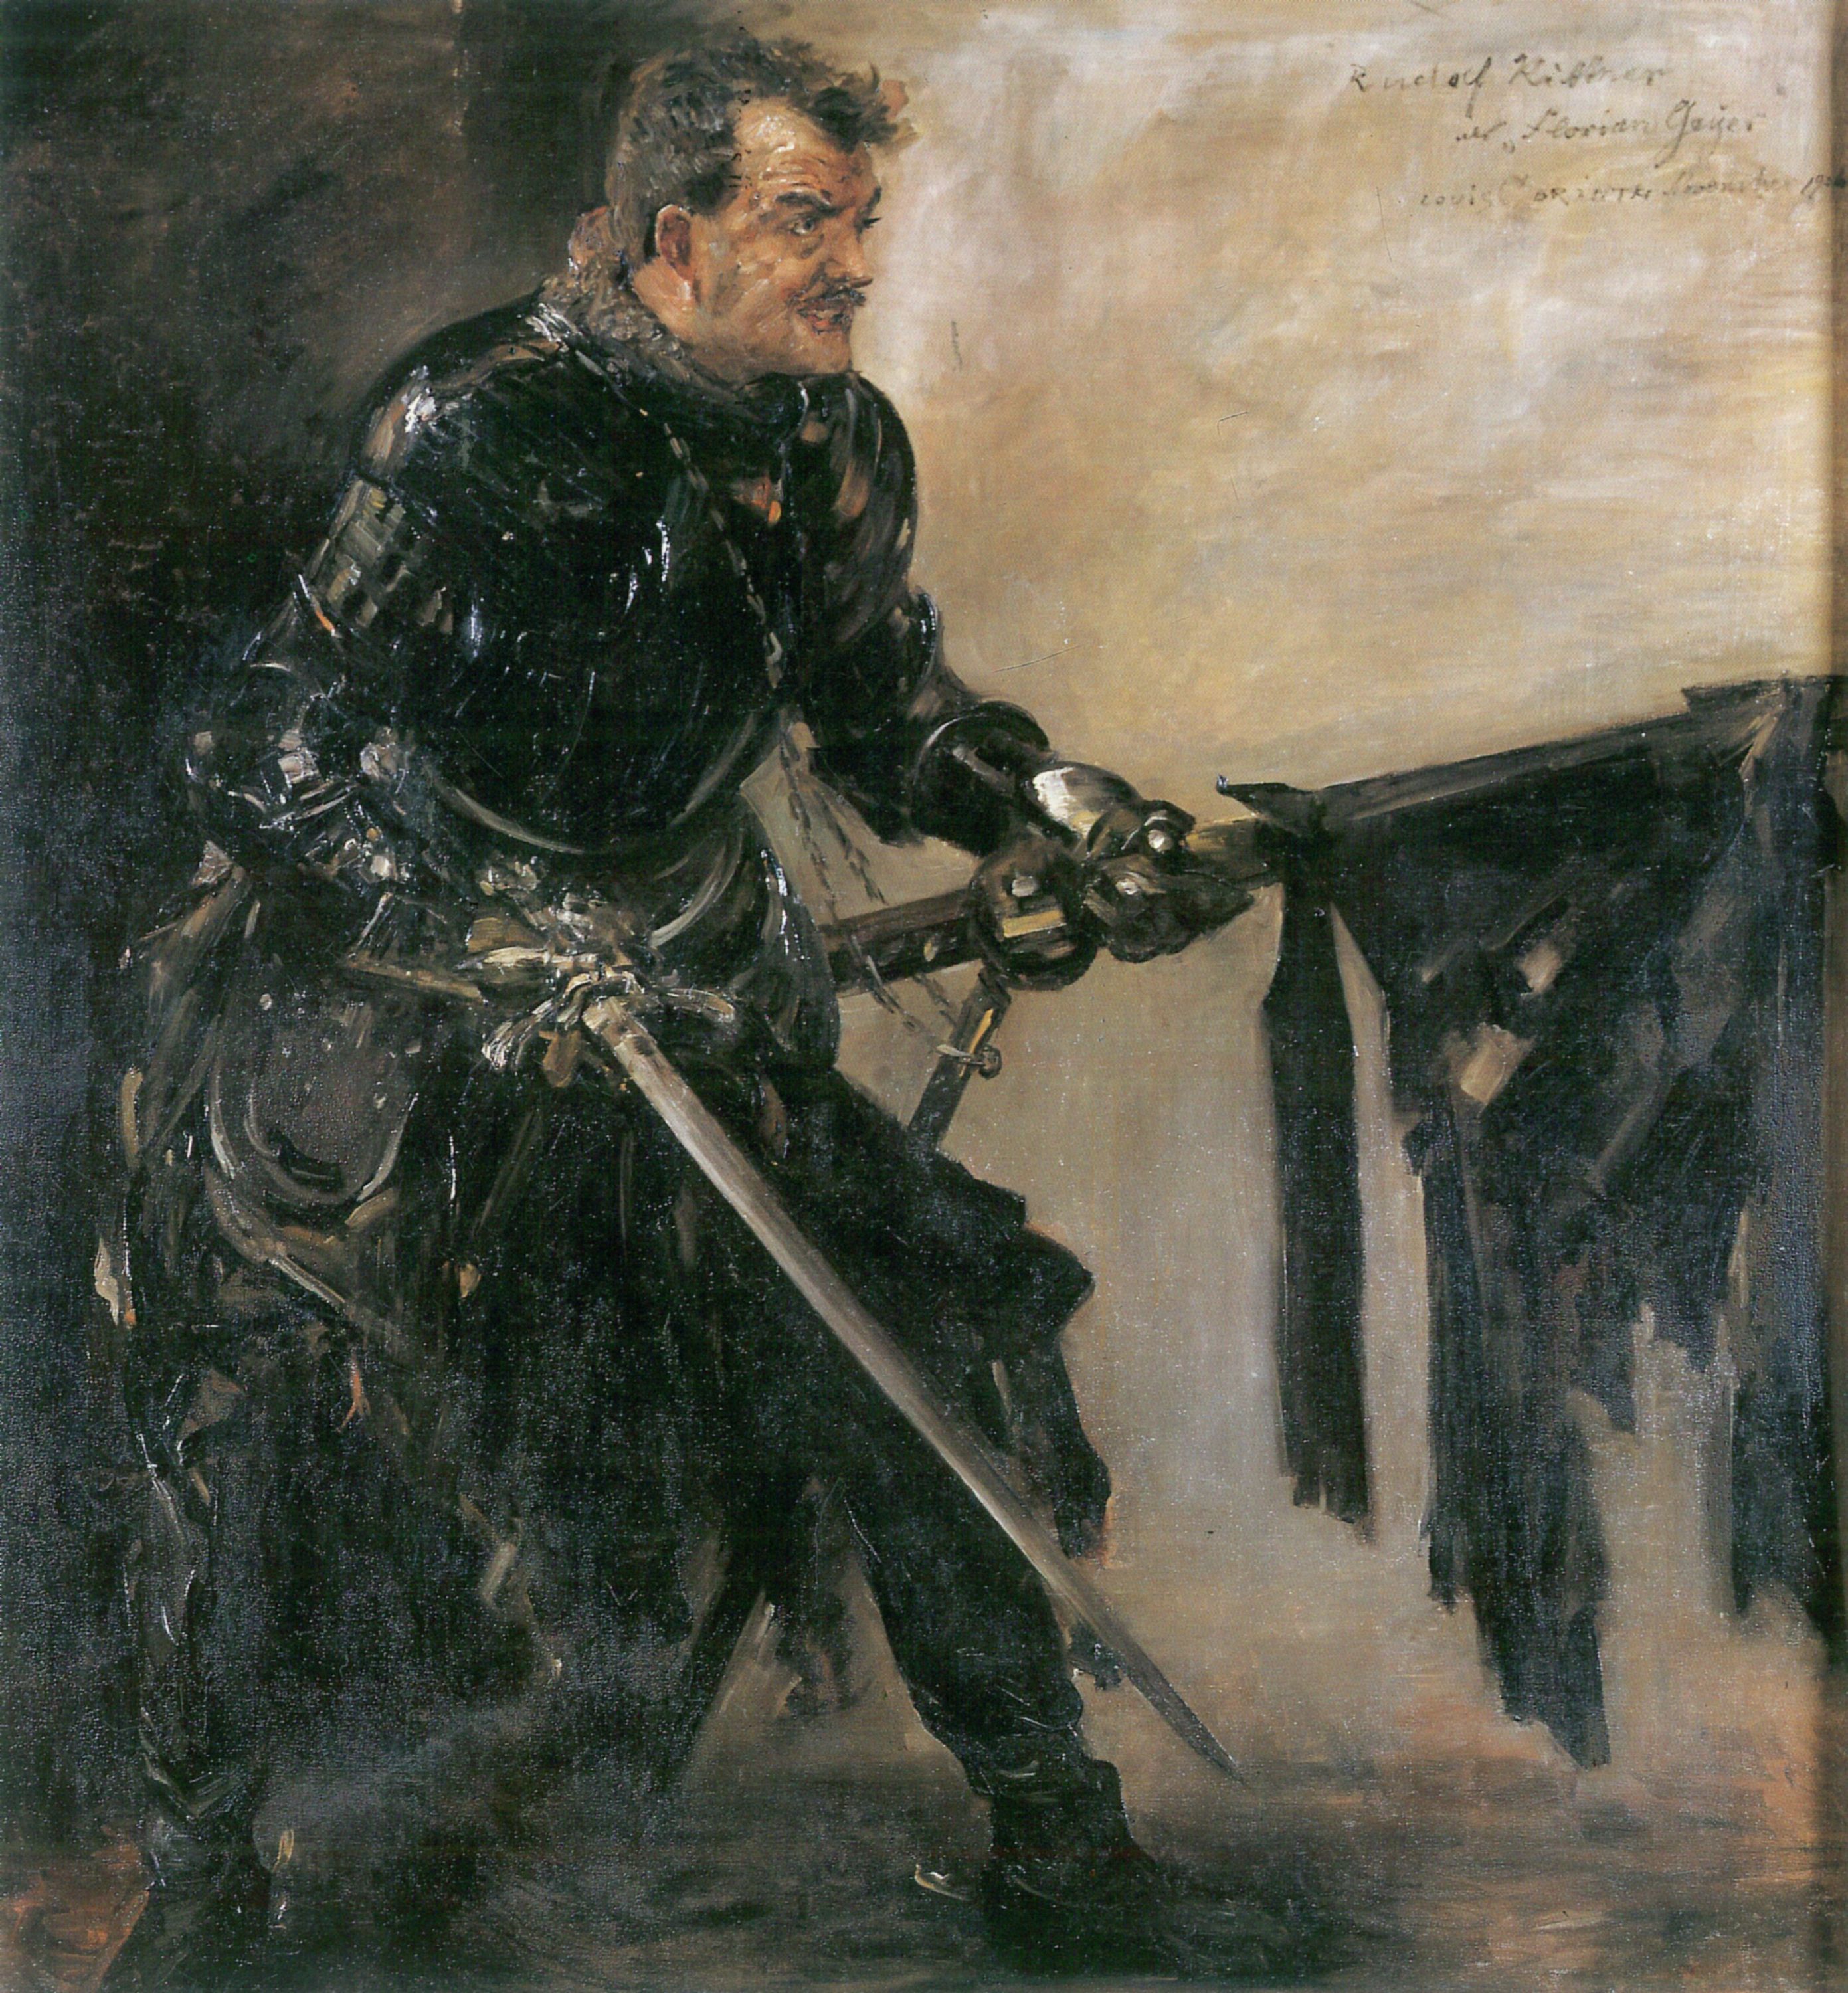 Rudolf Rittner as Florian Geyer, 1906 painting by [[Lovis Corinth